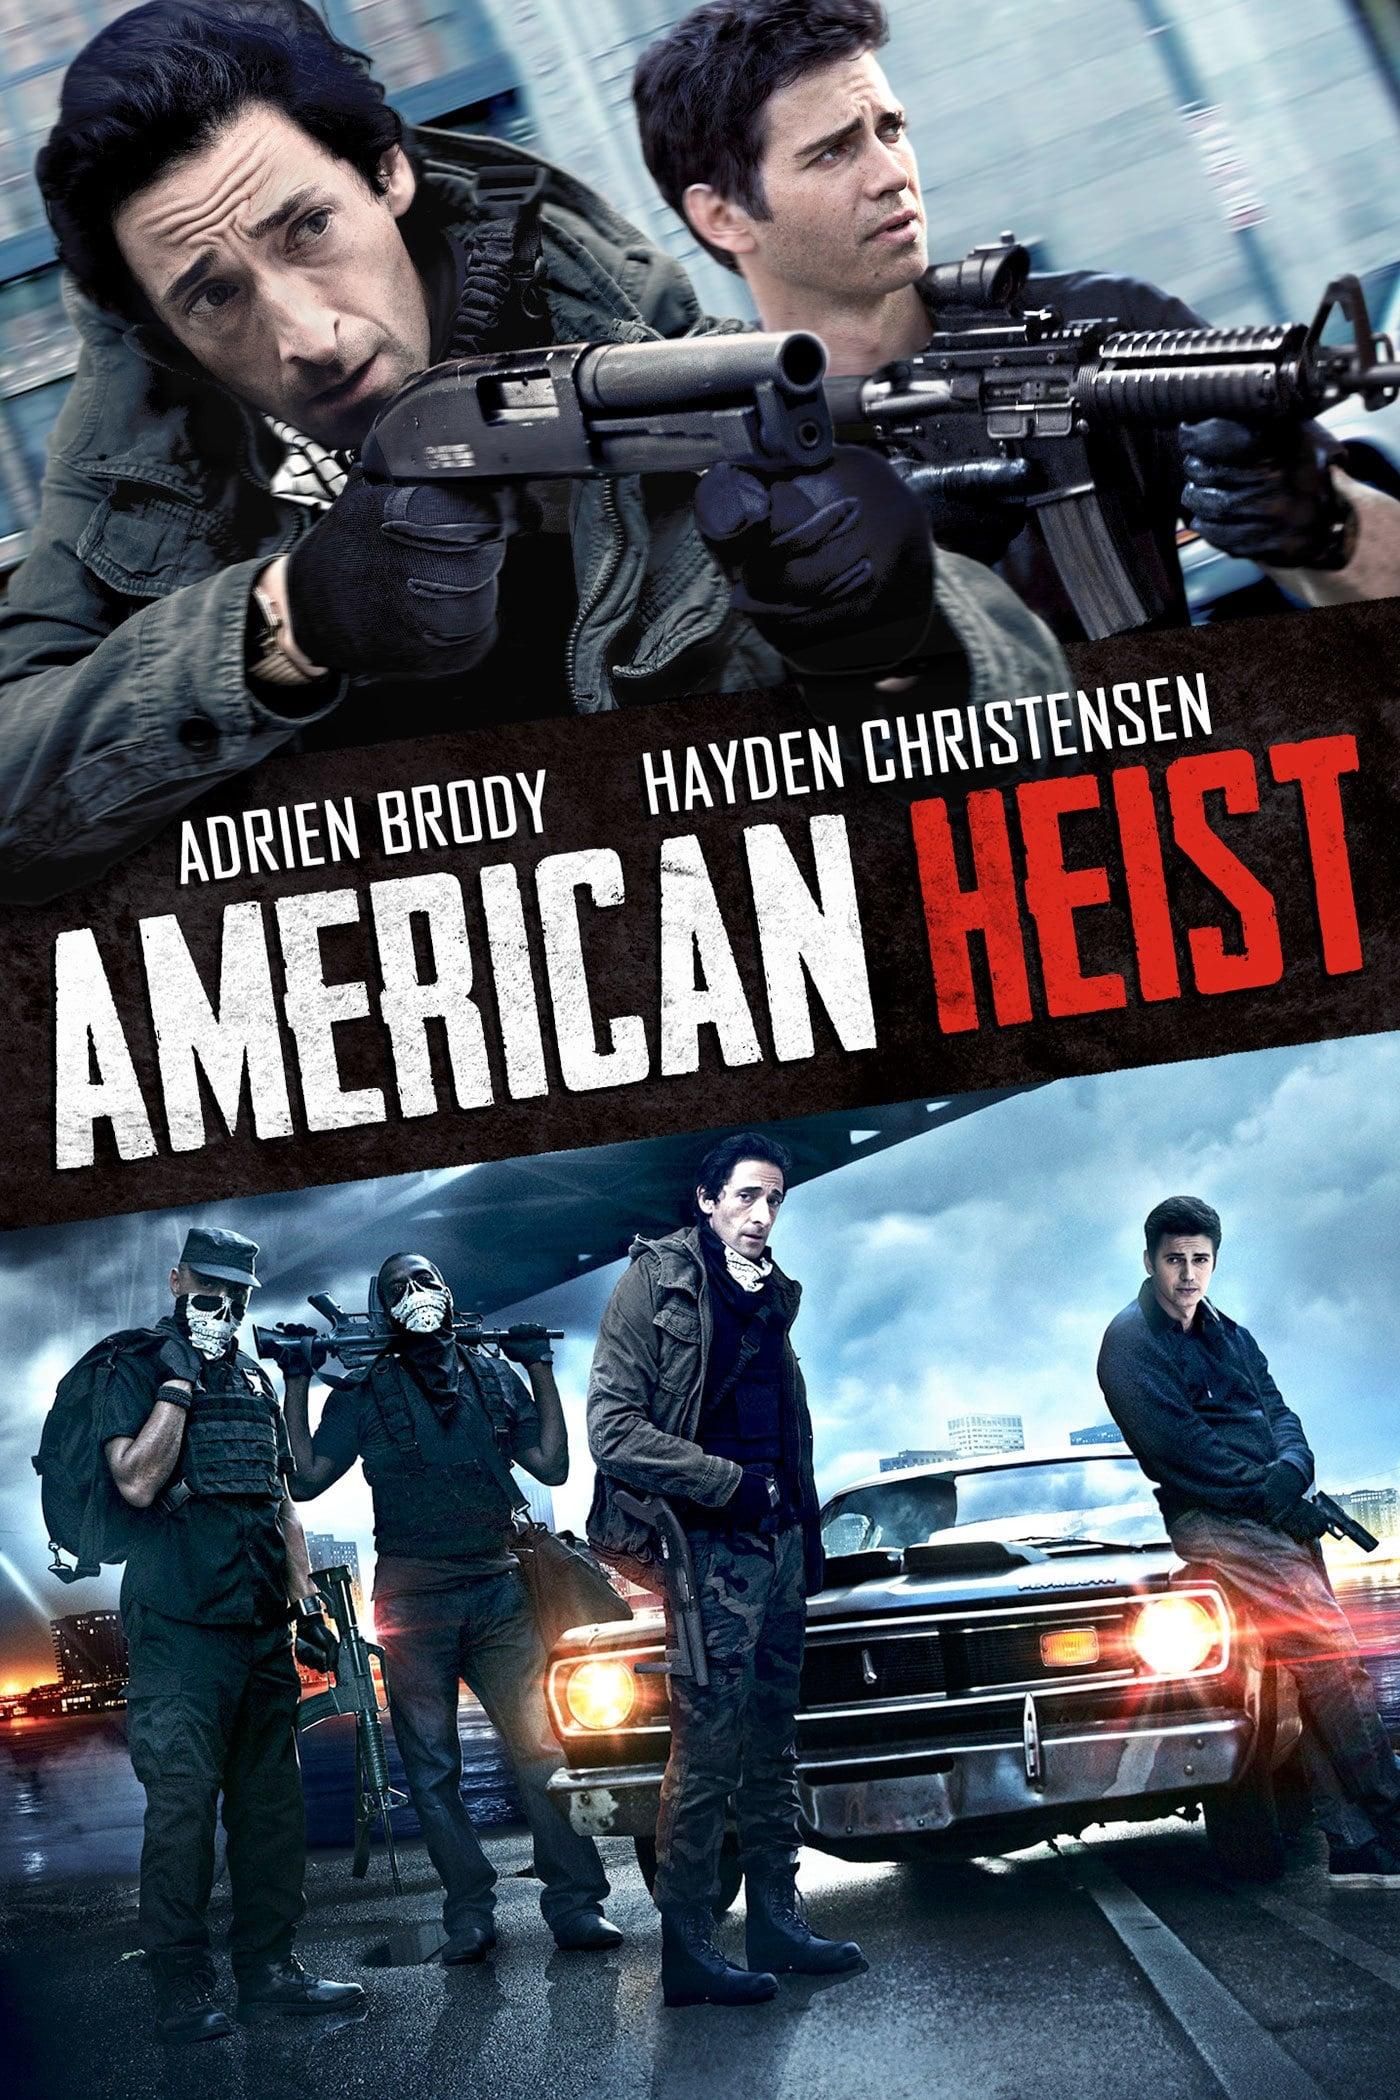 American Heist poster